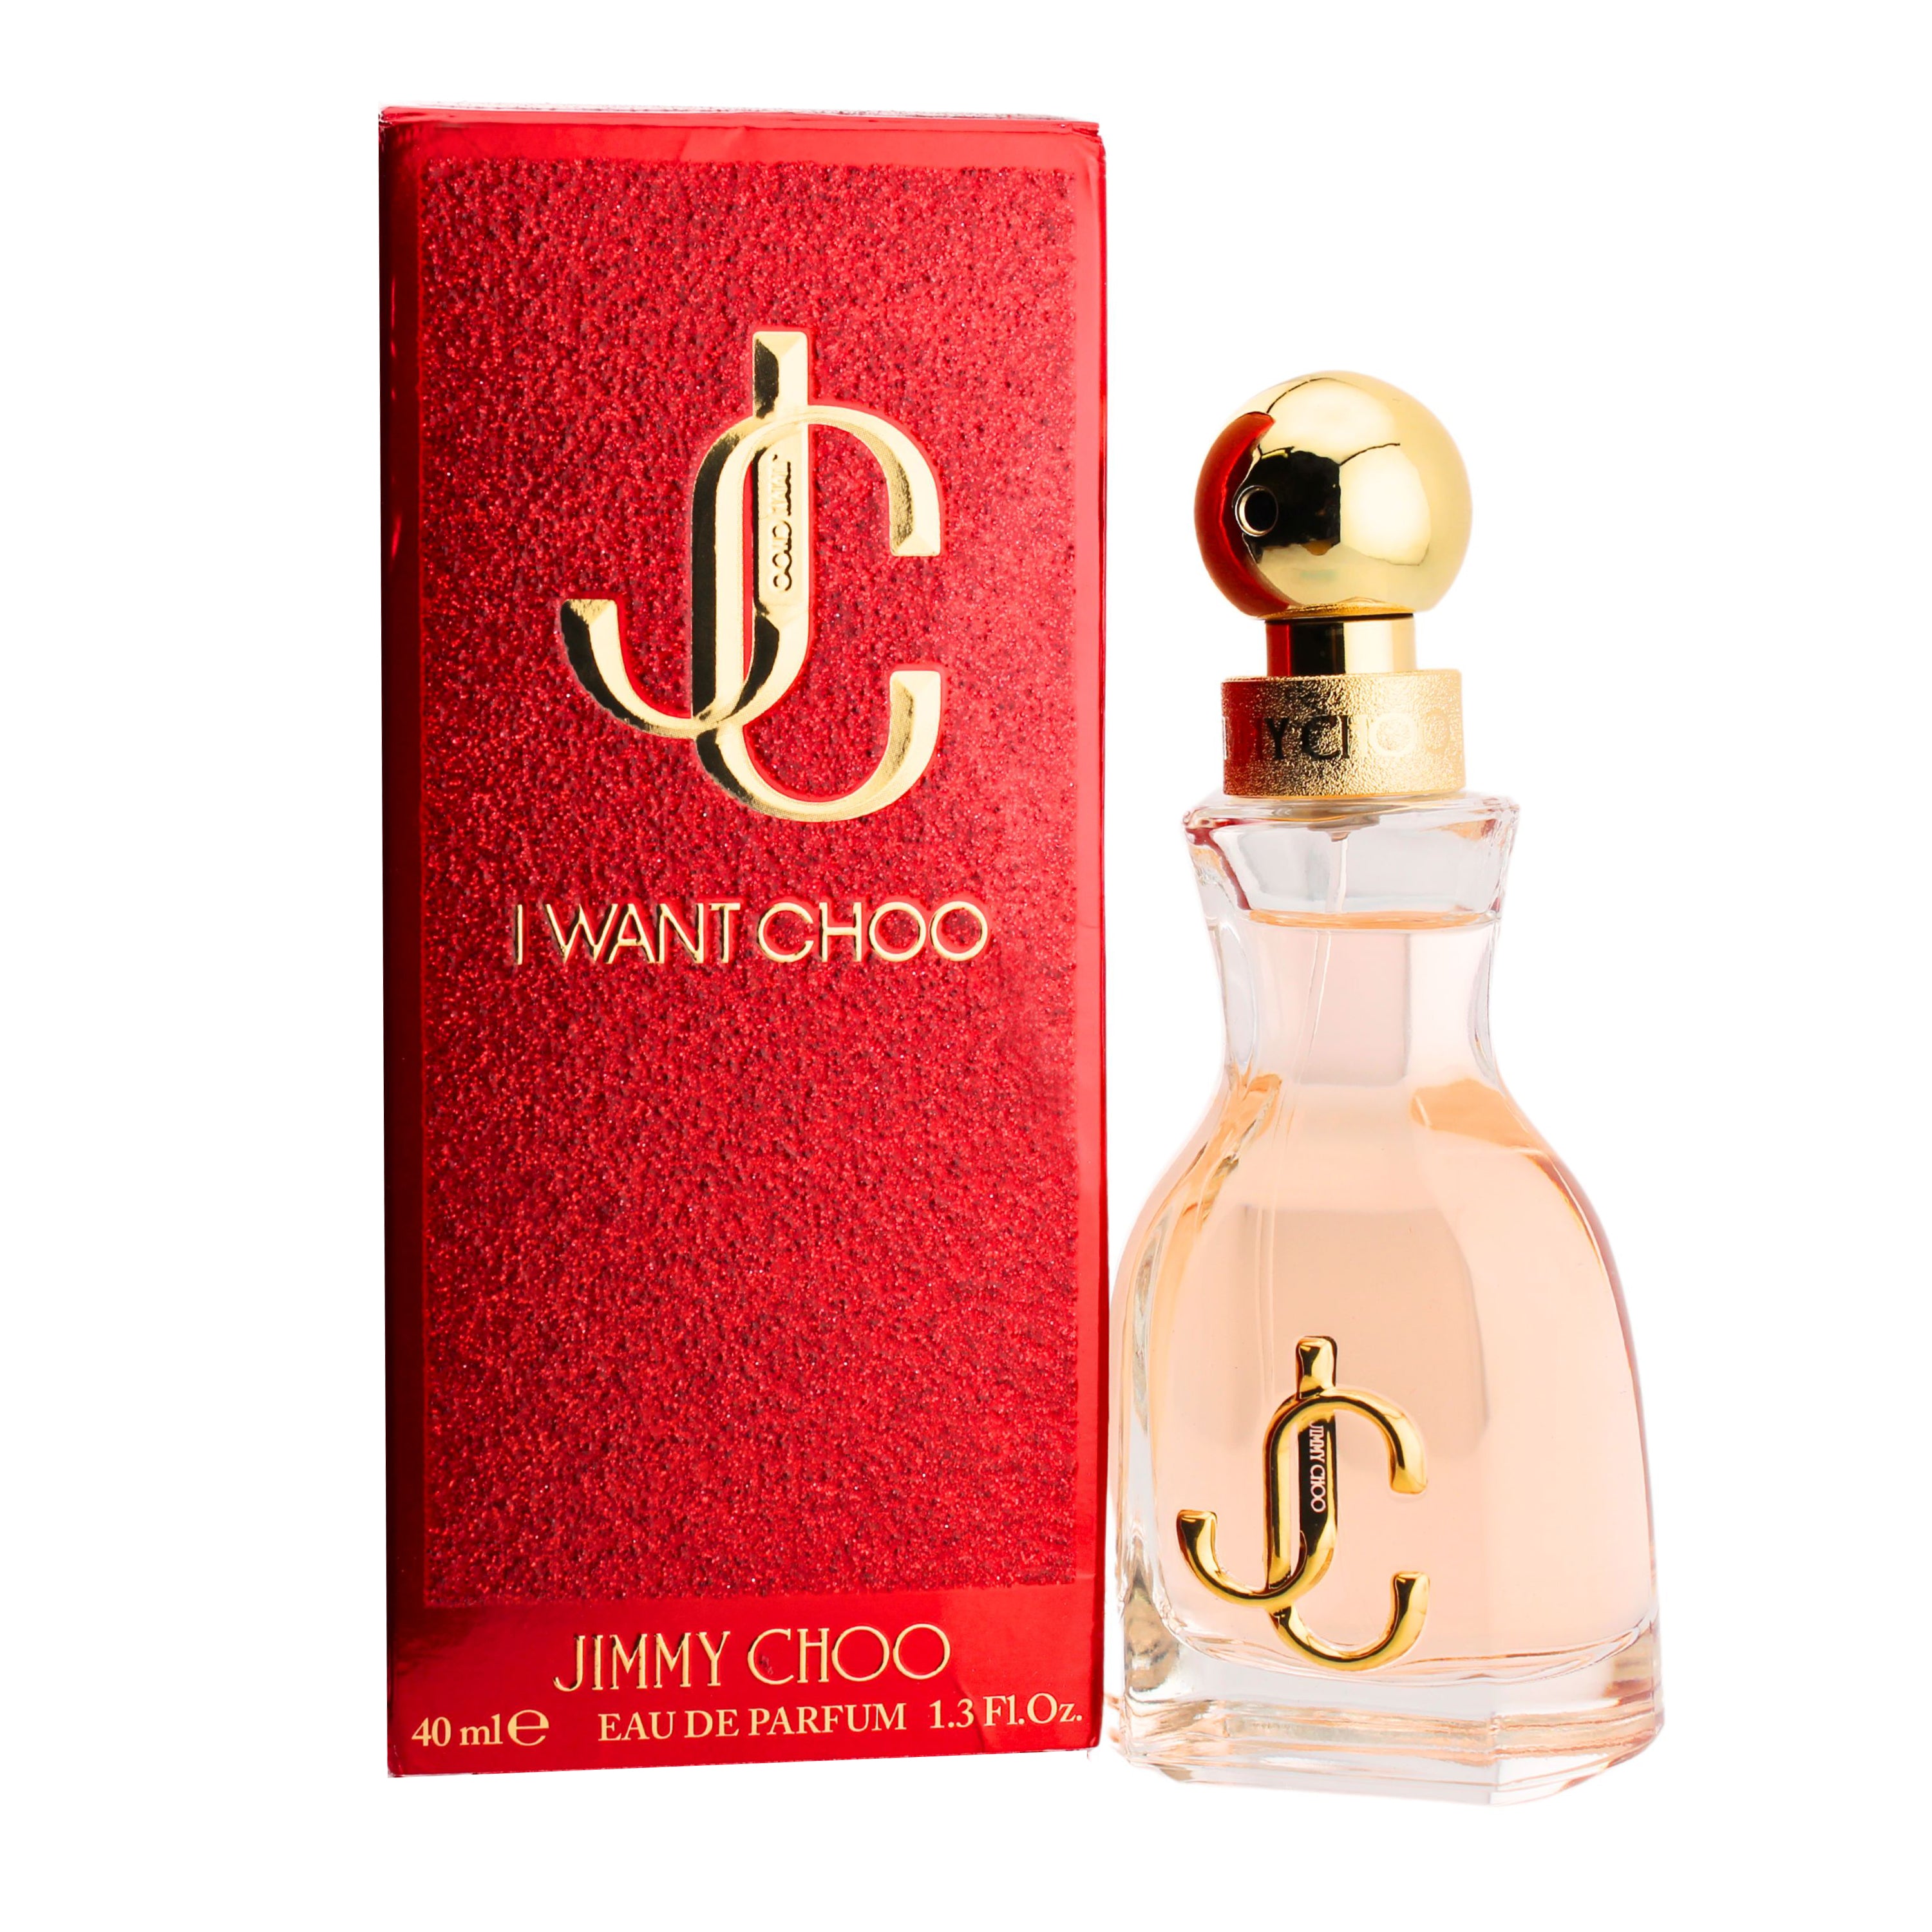 Jimmy Choo I Want Choo Eau de Parfum for Women